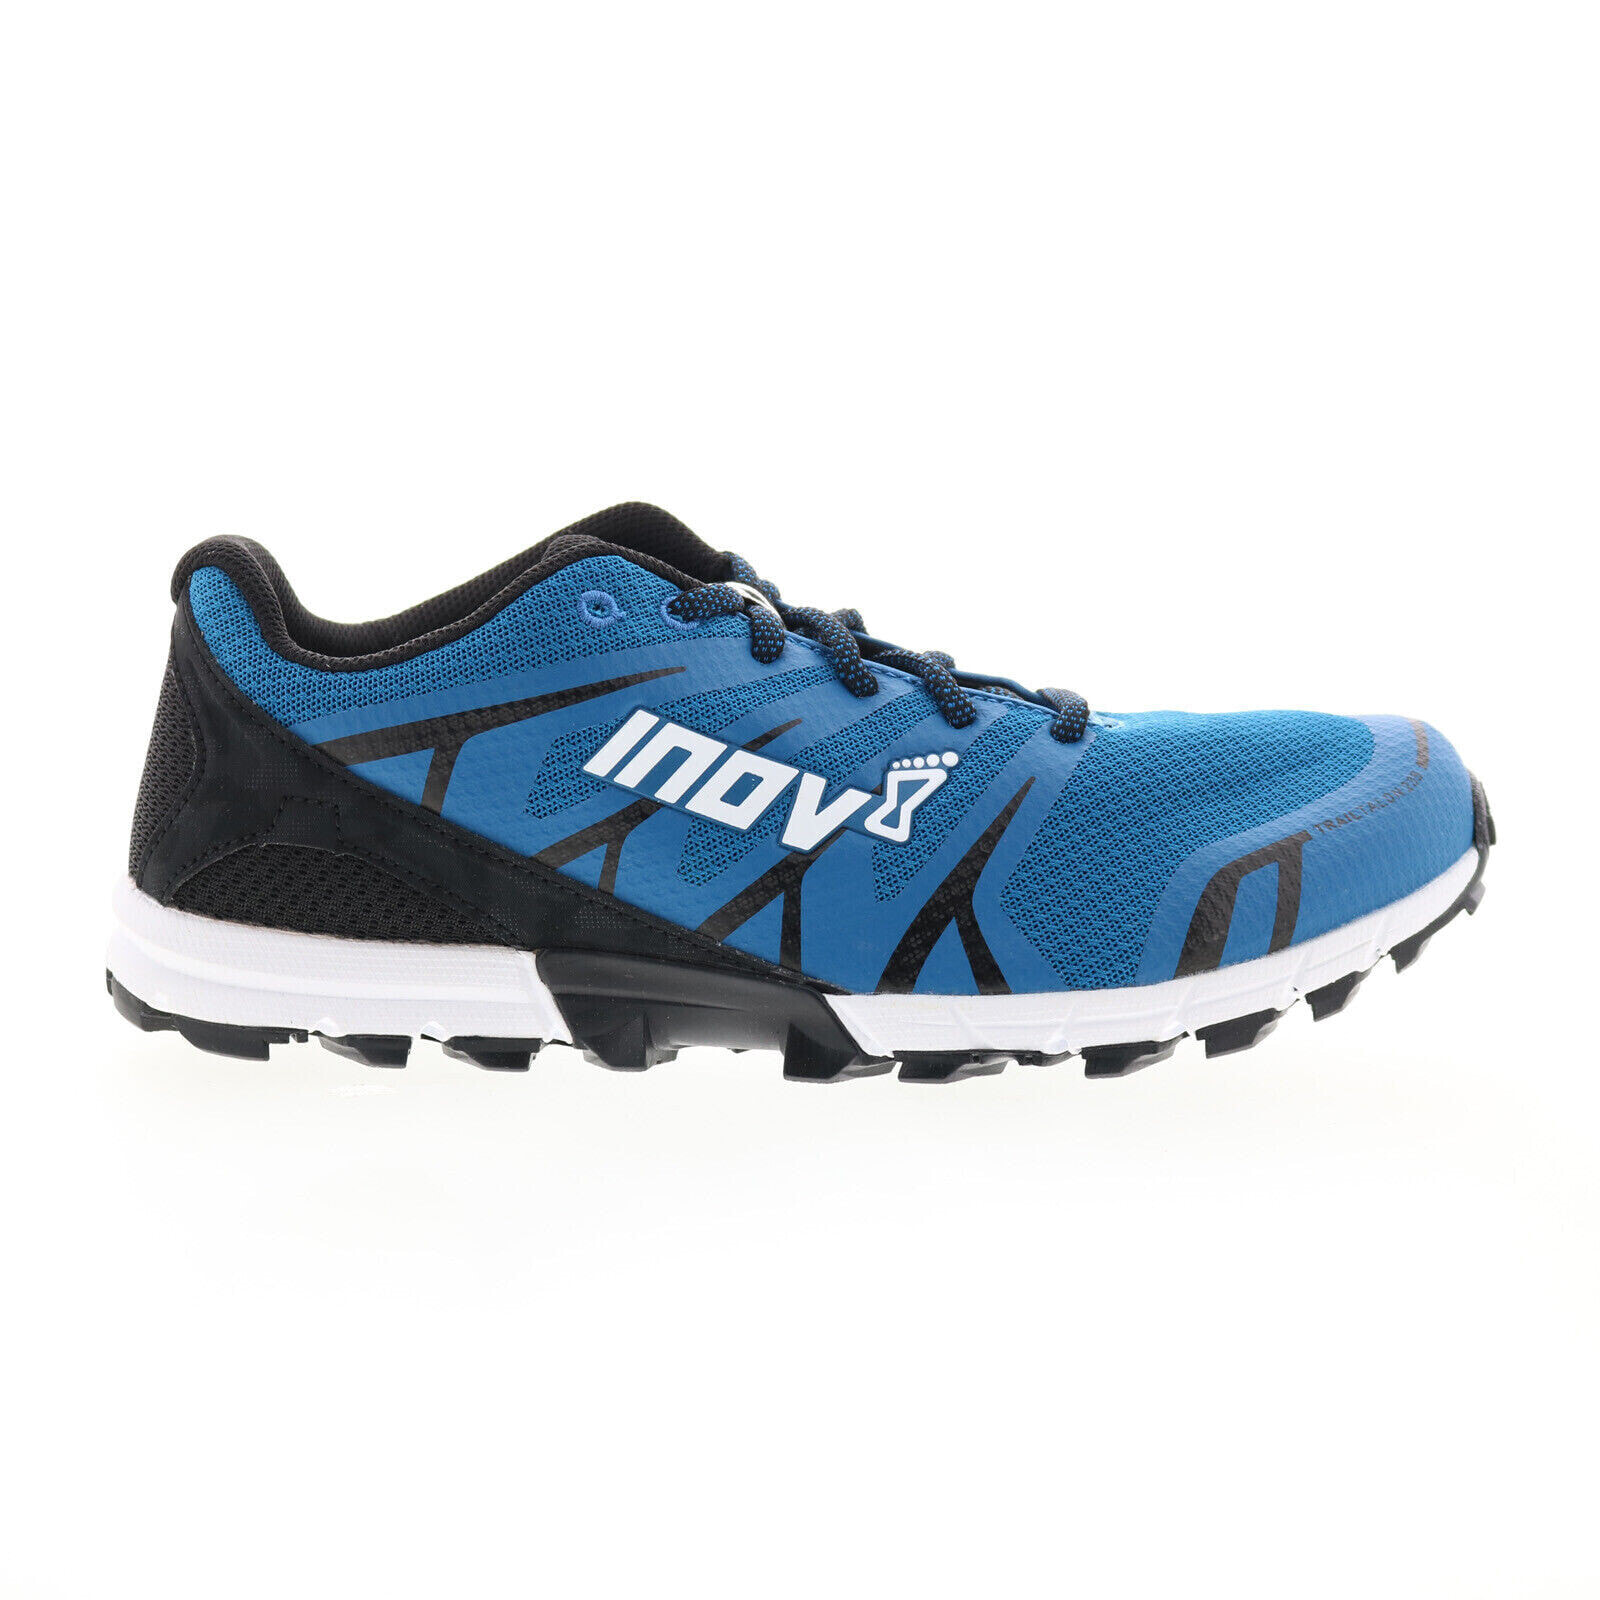 Inov-8 Trailtalon 235 000714-BLNYWH Mens Blue Canvas Athletic Hiking Shoes 8